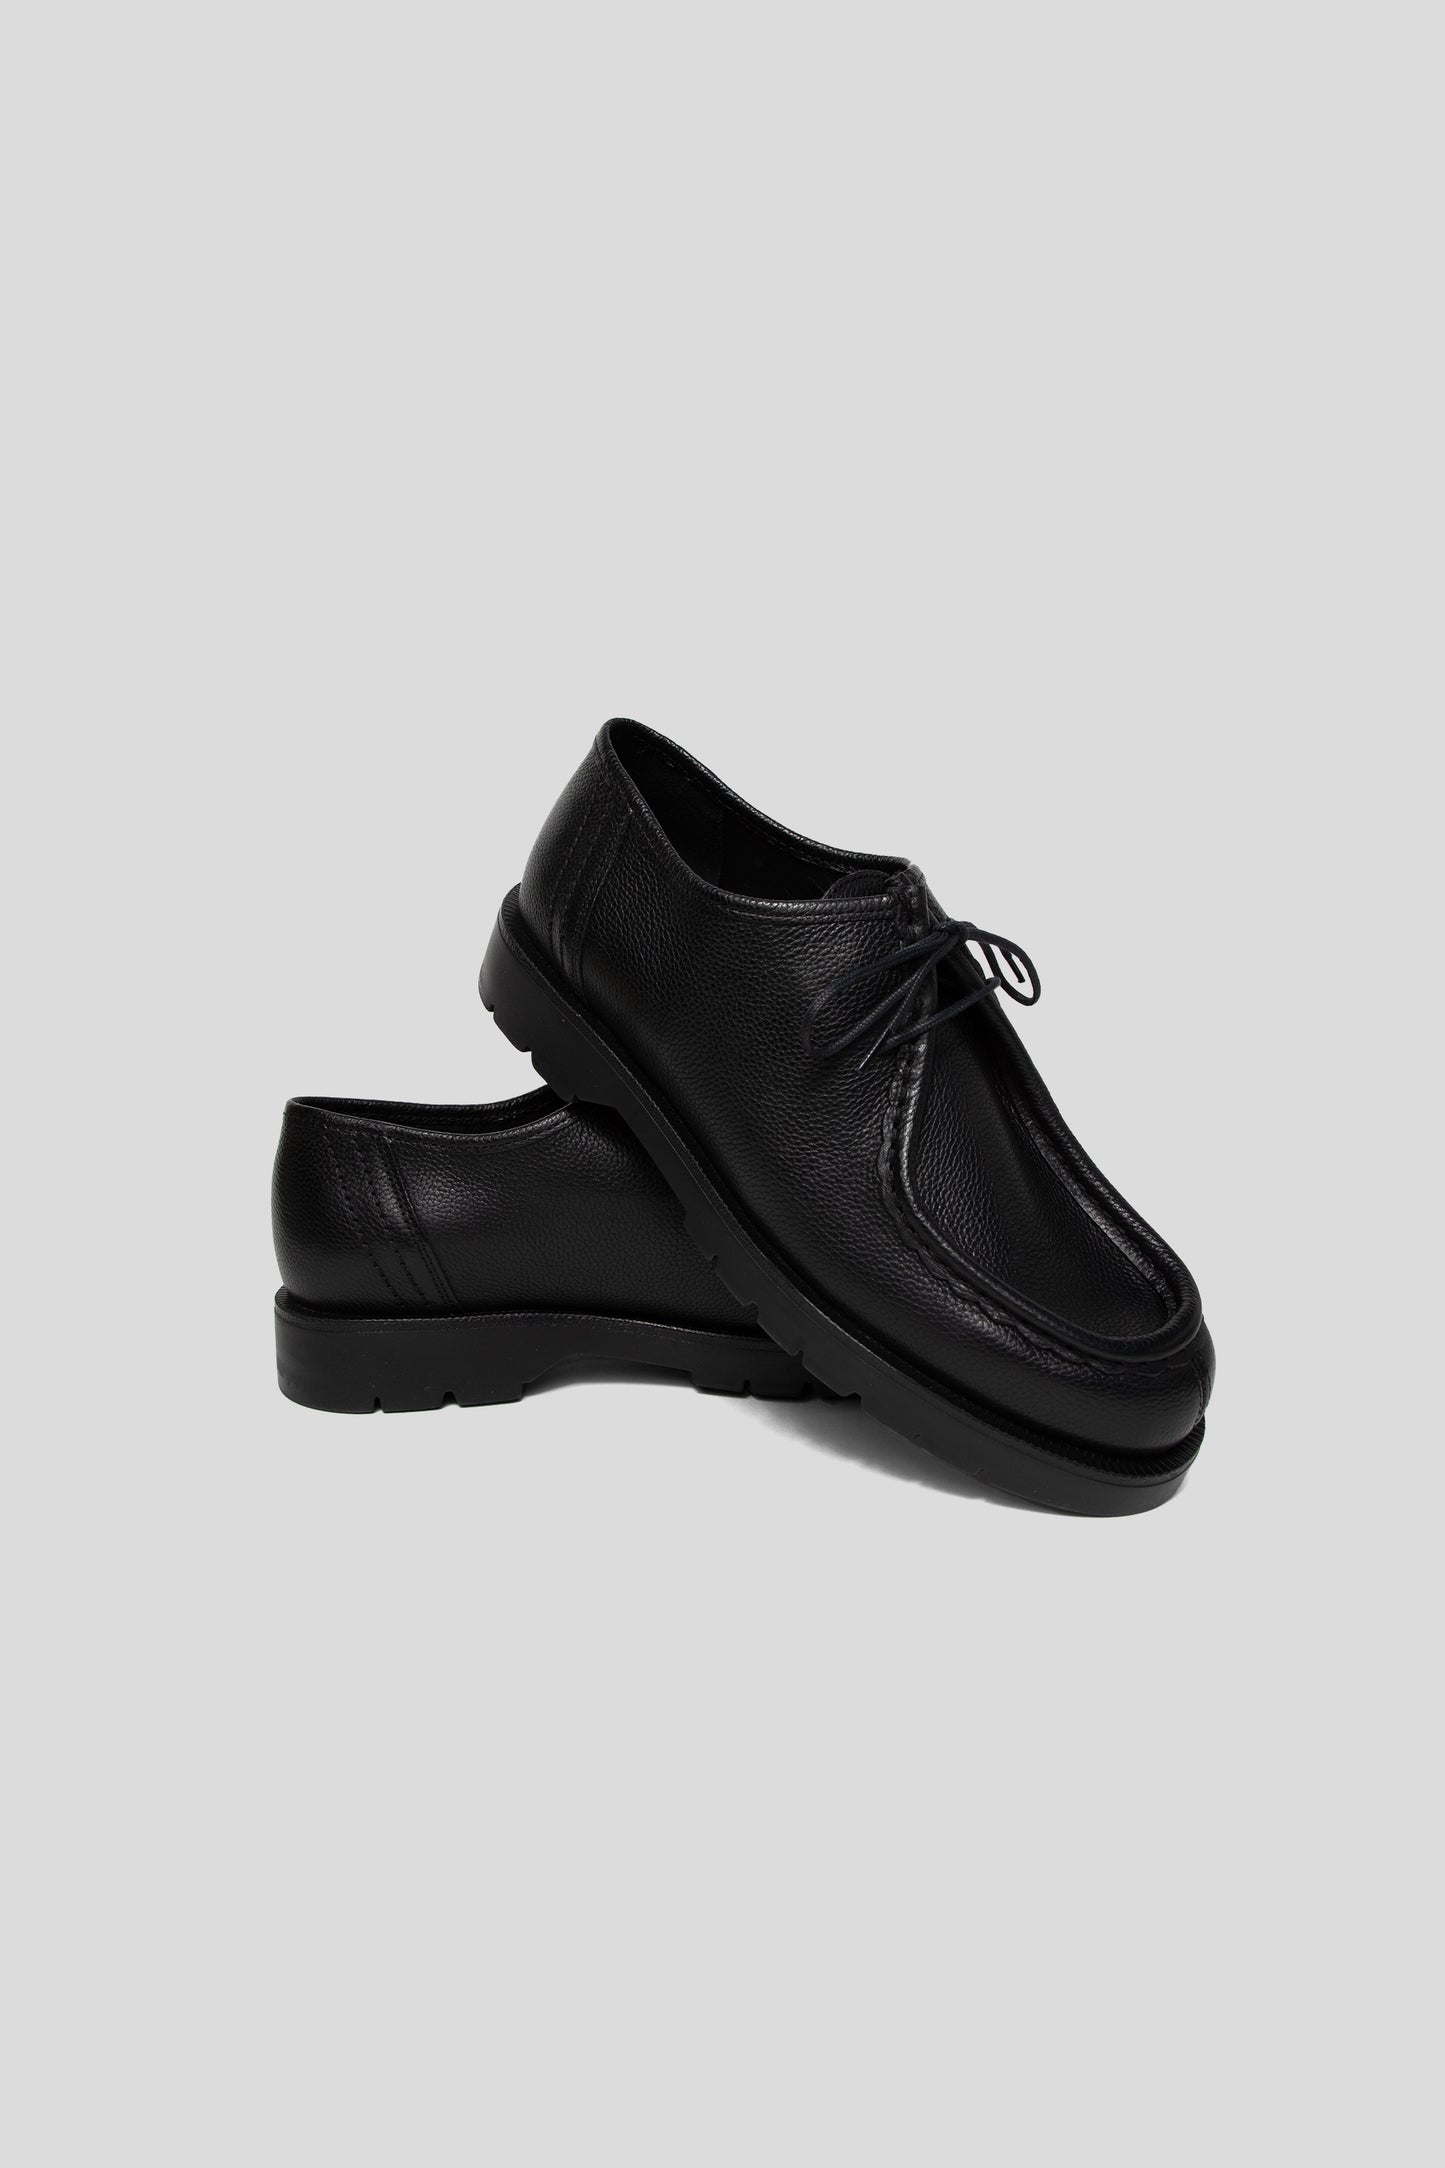 Kleman Padror G VGT Shoe in Black